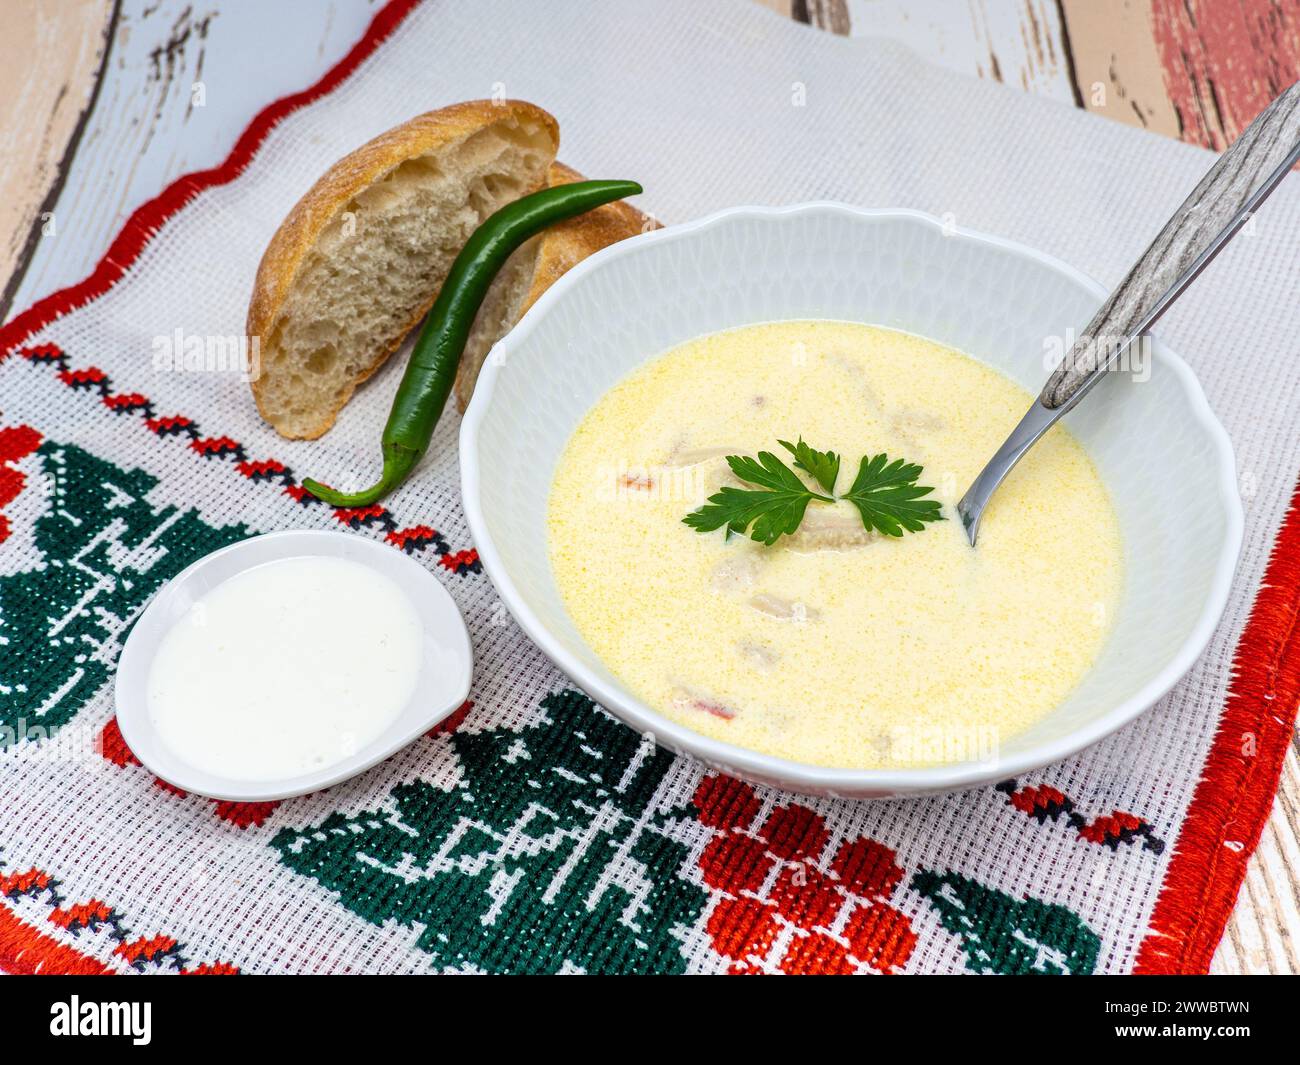 zuppa rumena di trippa con peperoni caldi, panna acida e pane Foto Stock